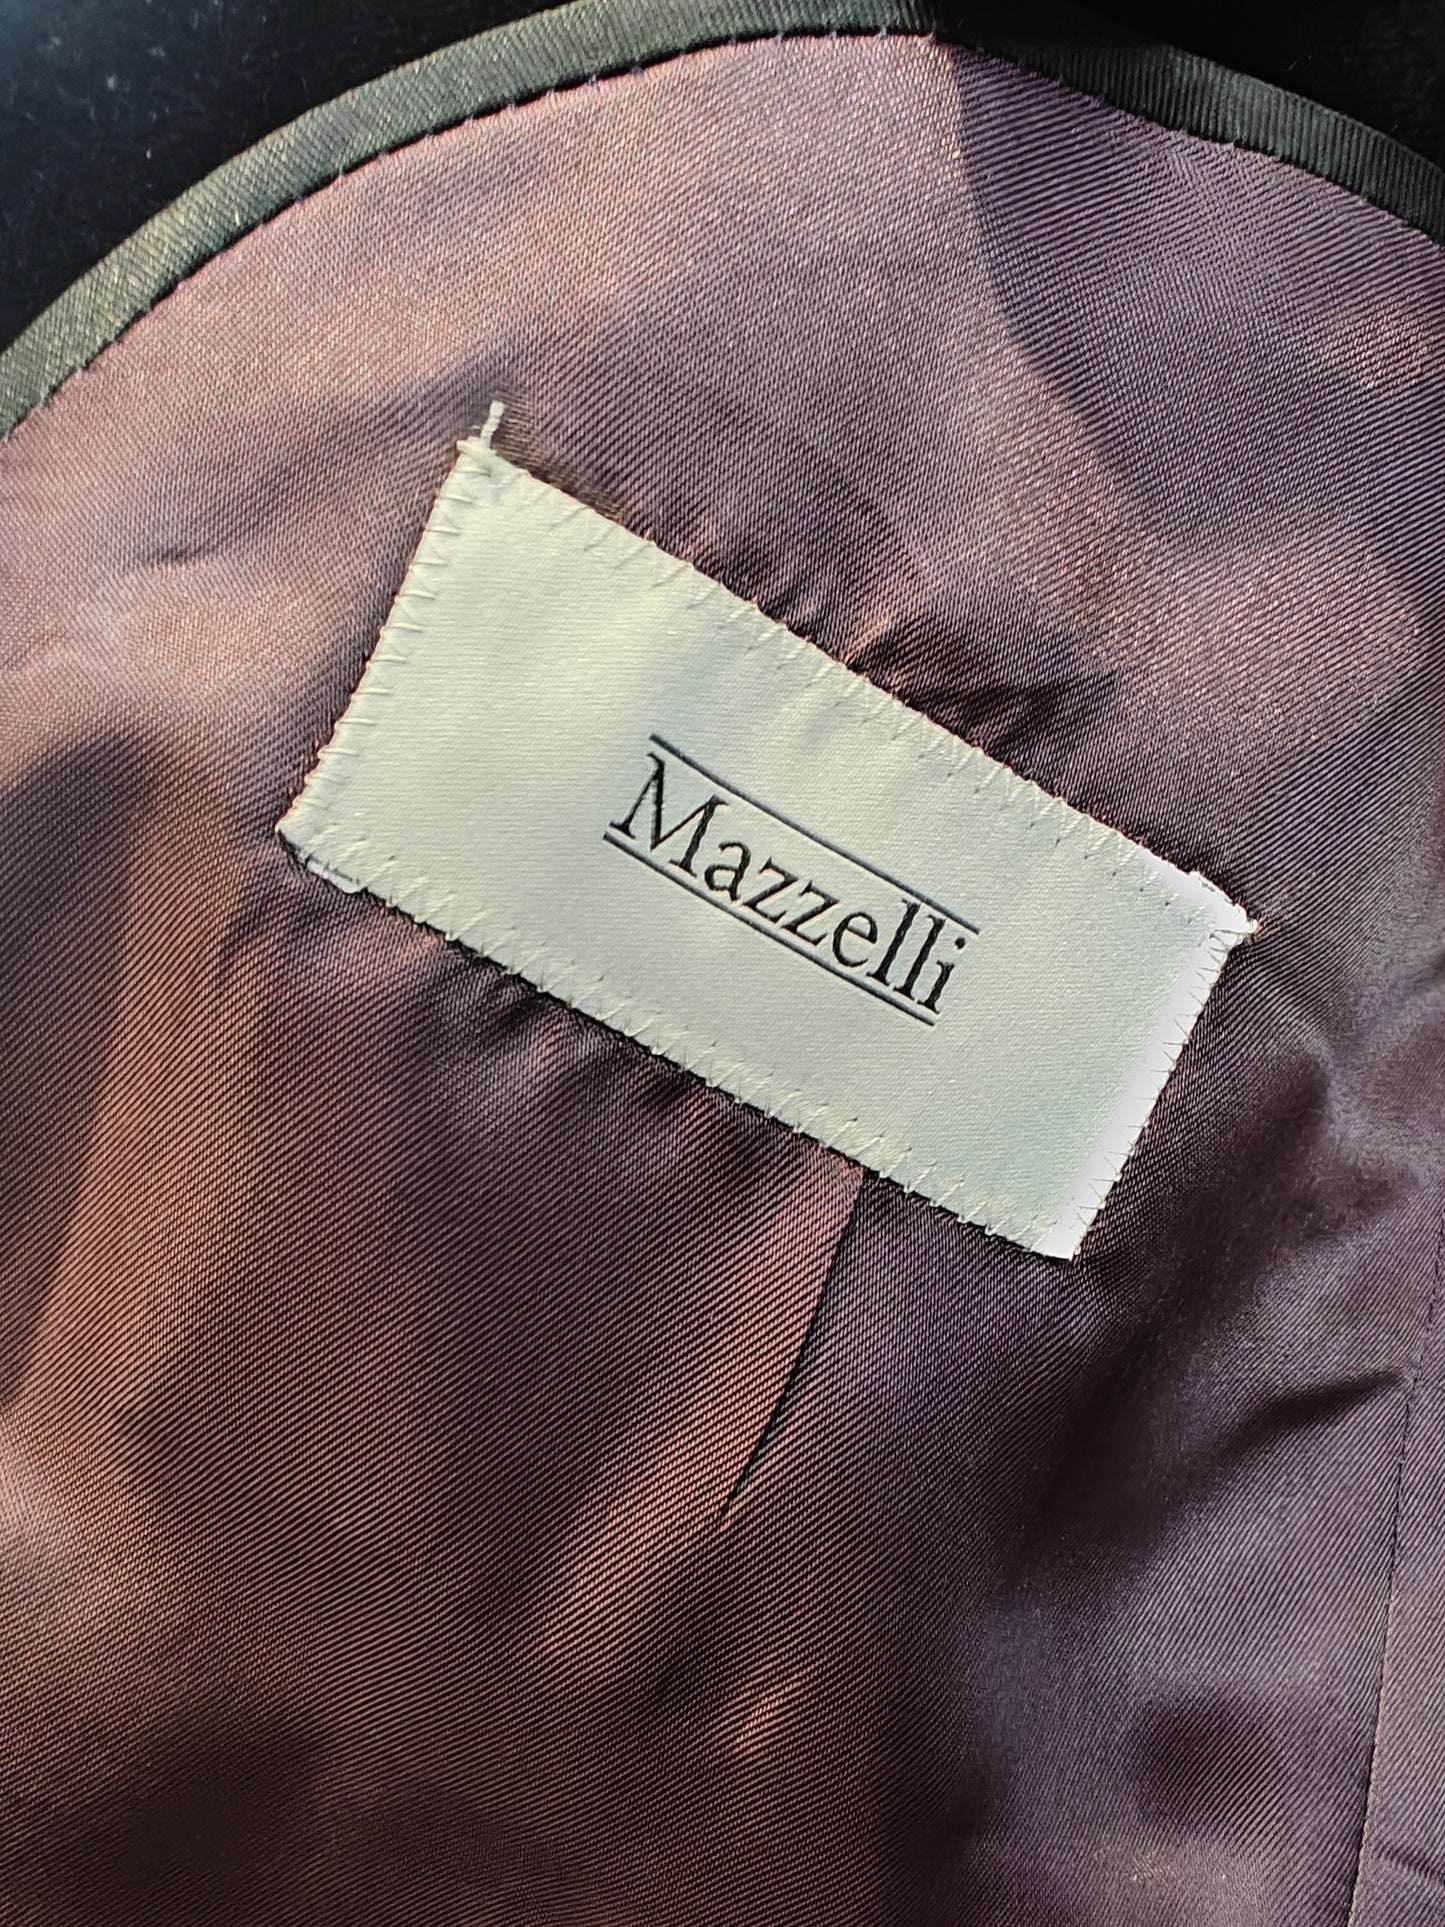 Emerald check by Mazzelli